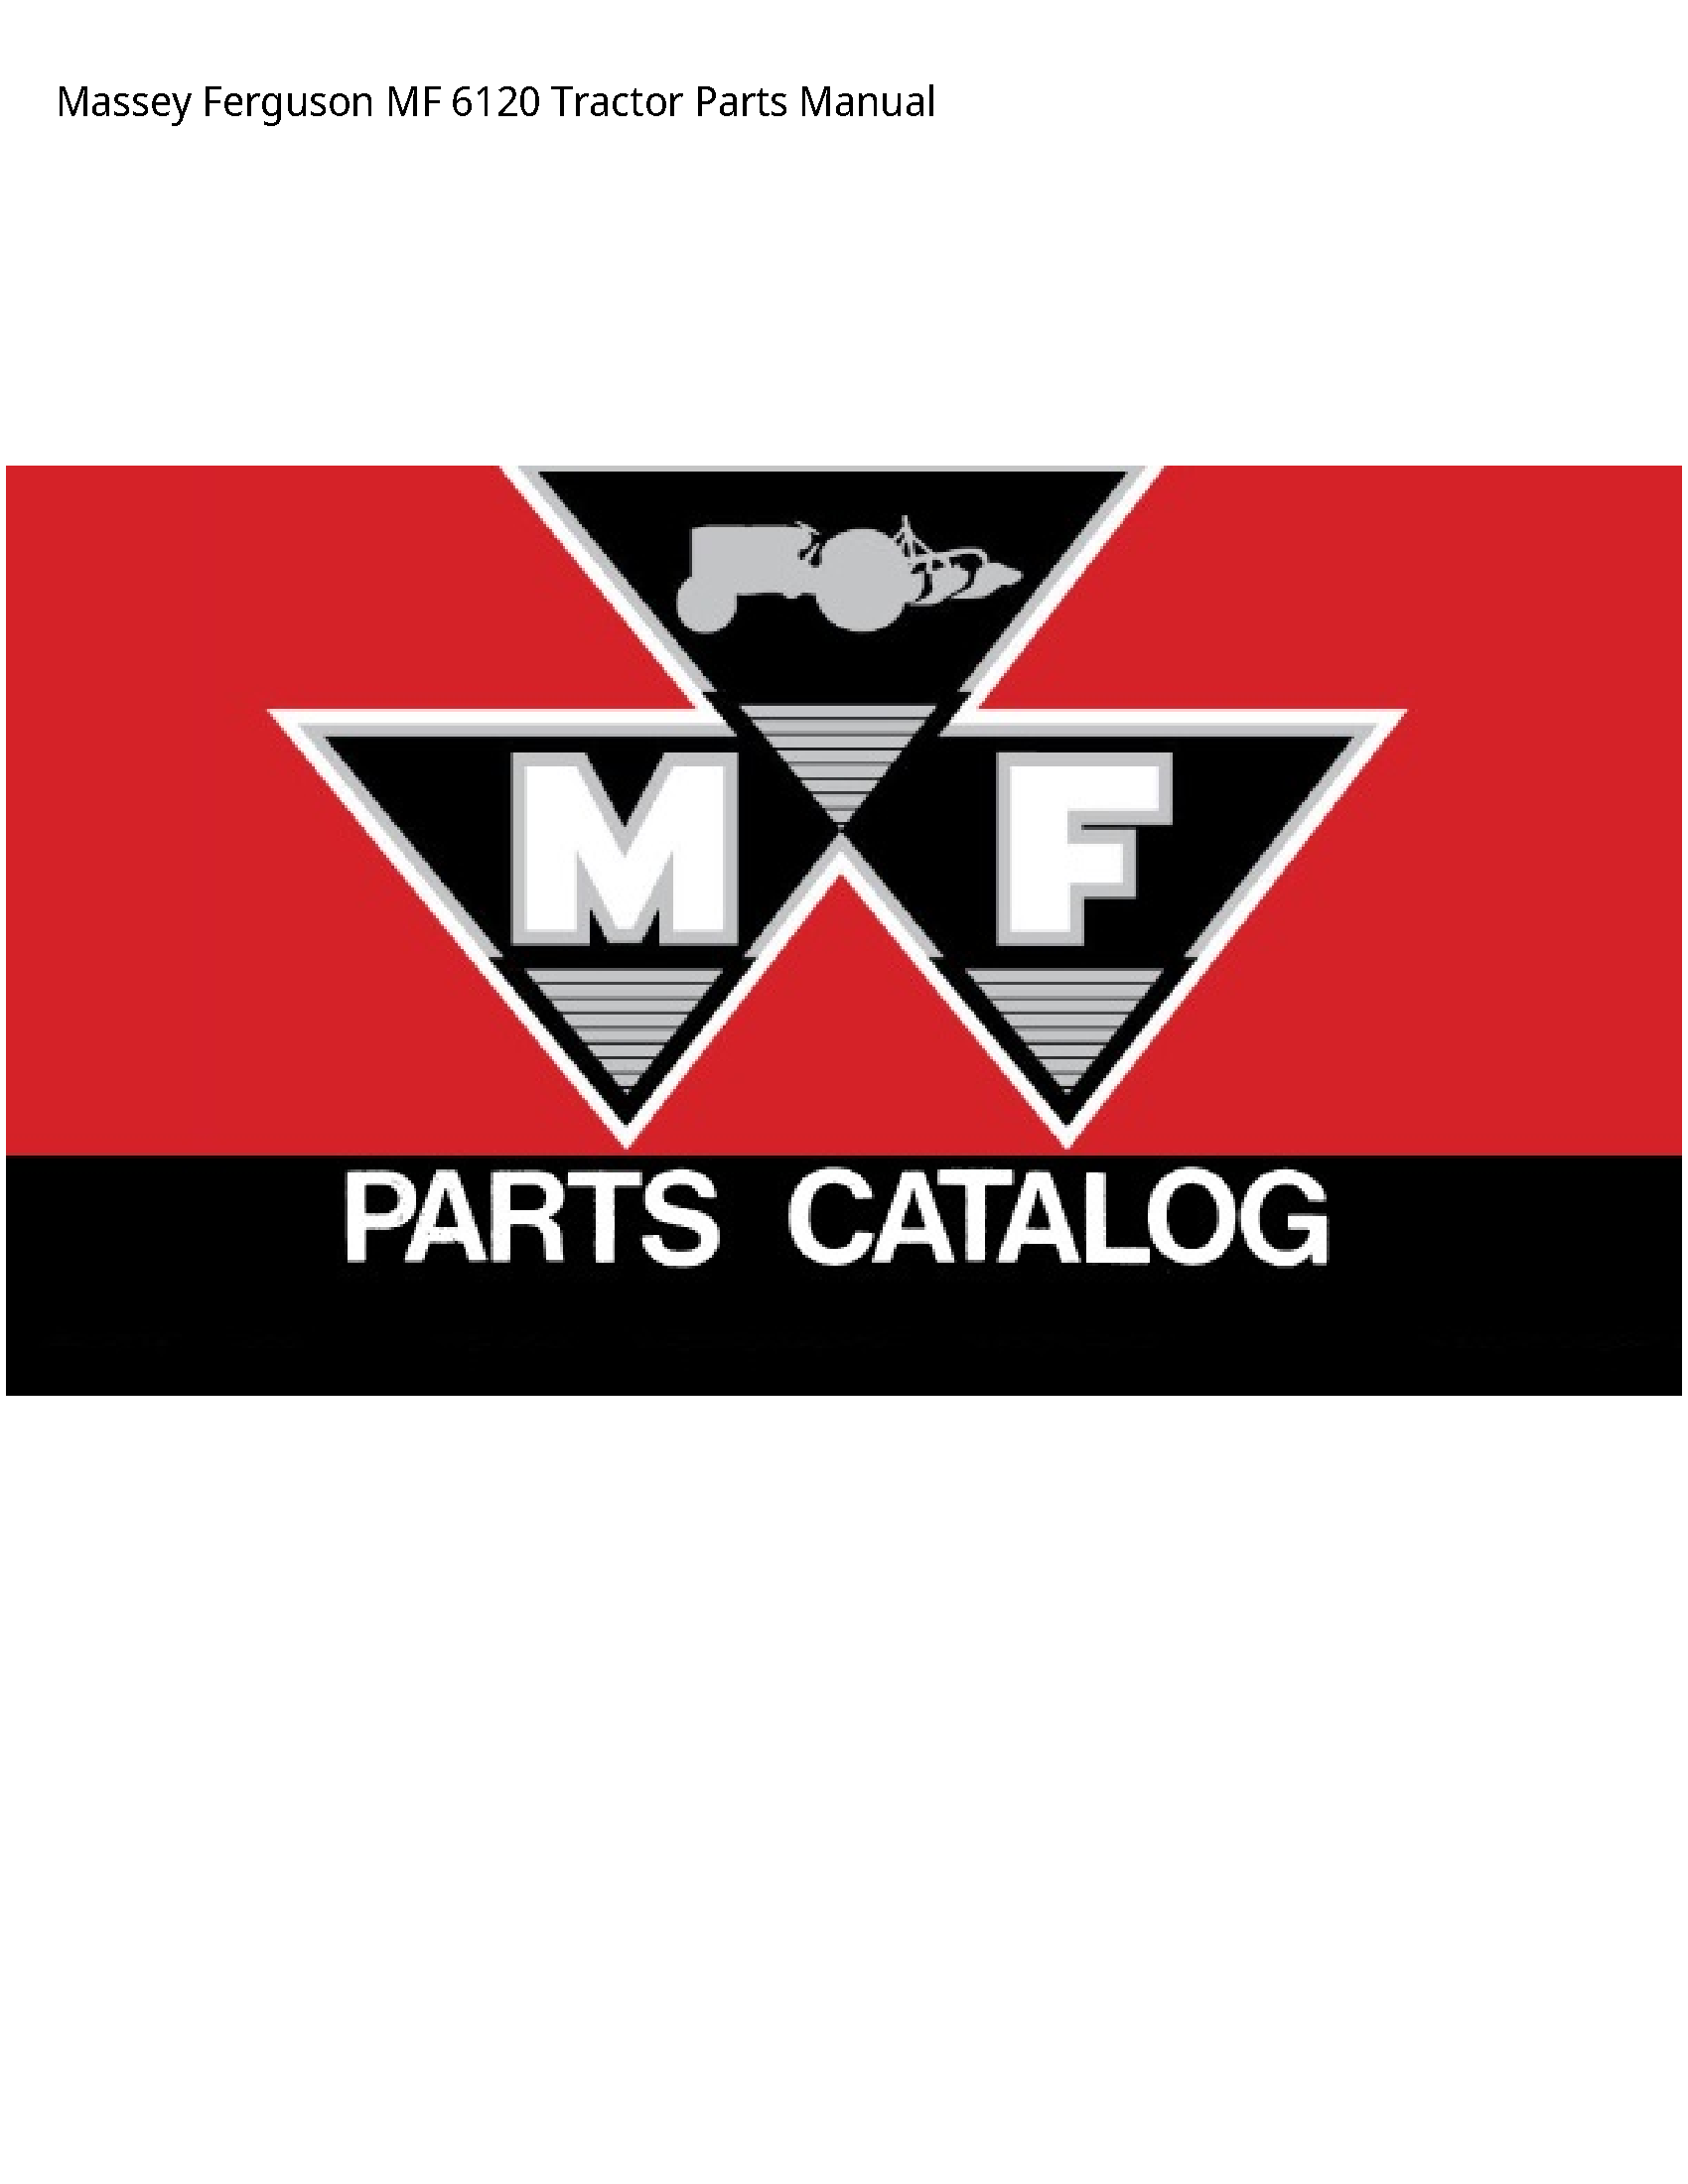 Massey Ferguson 6120 MF Tractor Parts manual